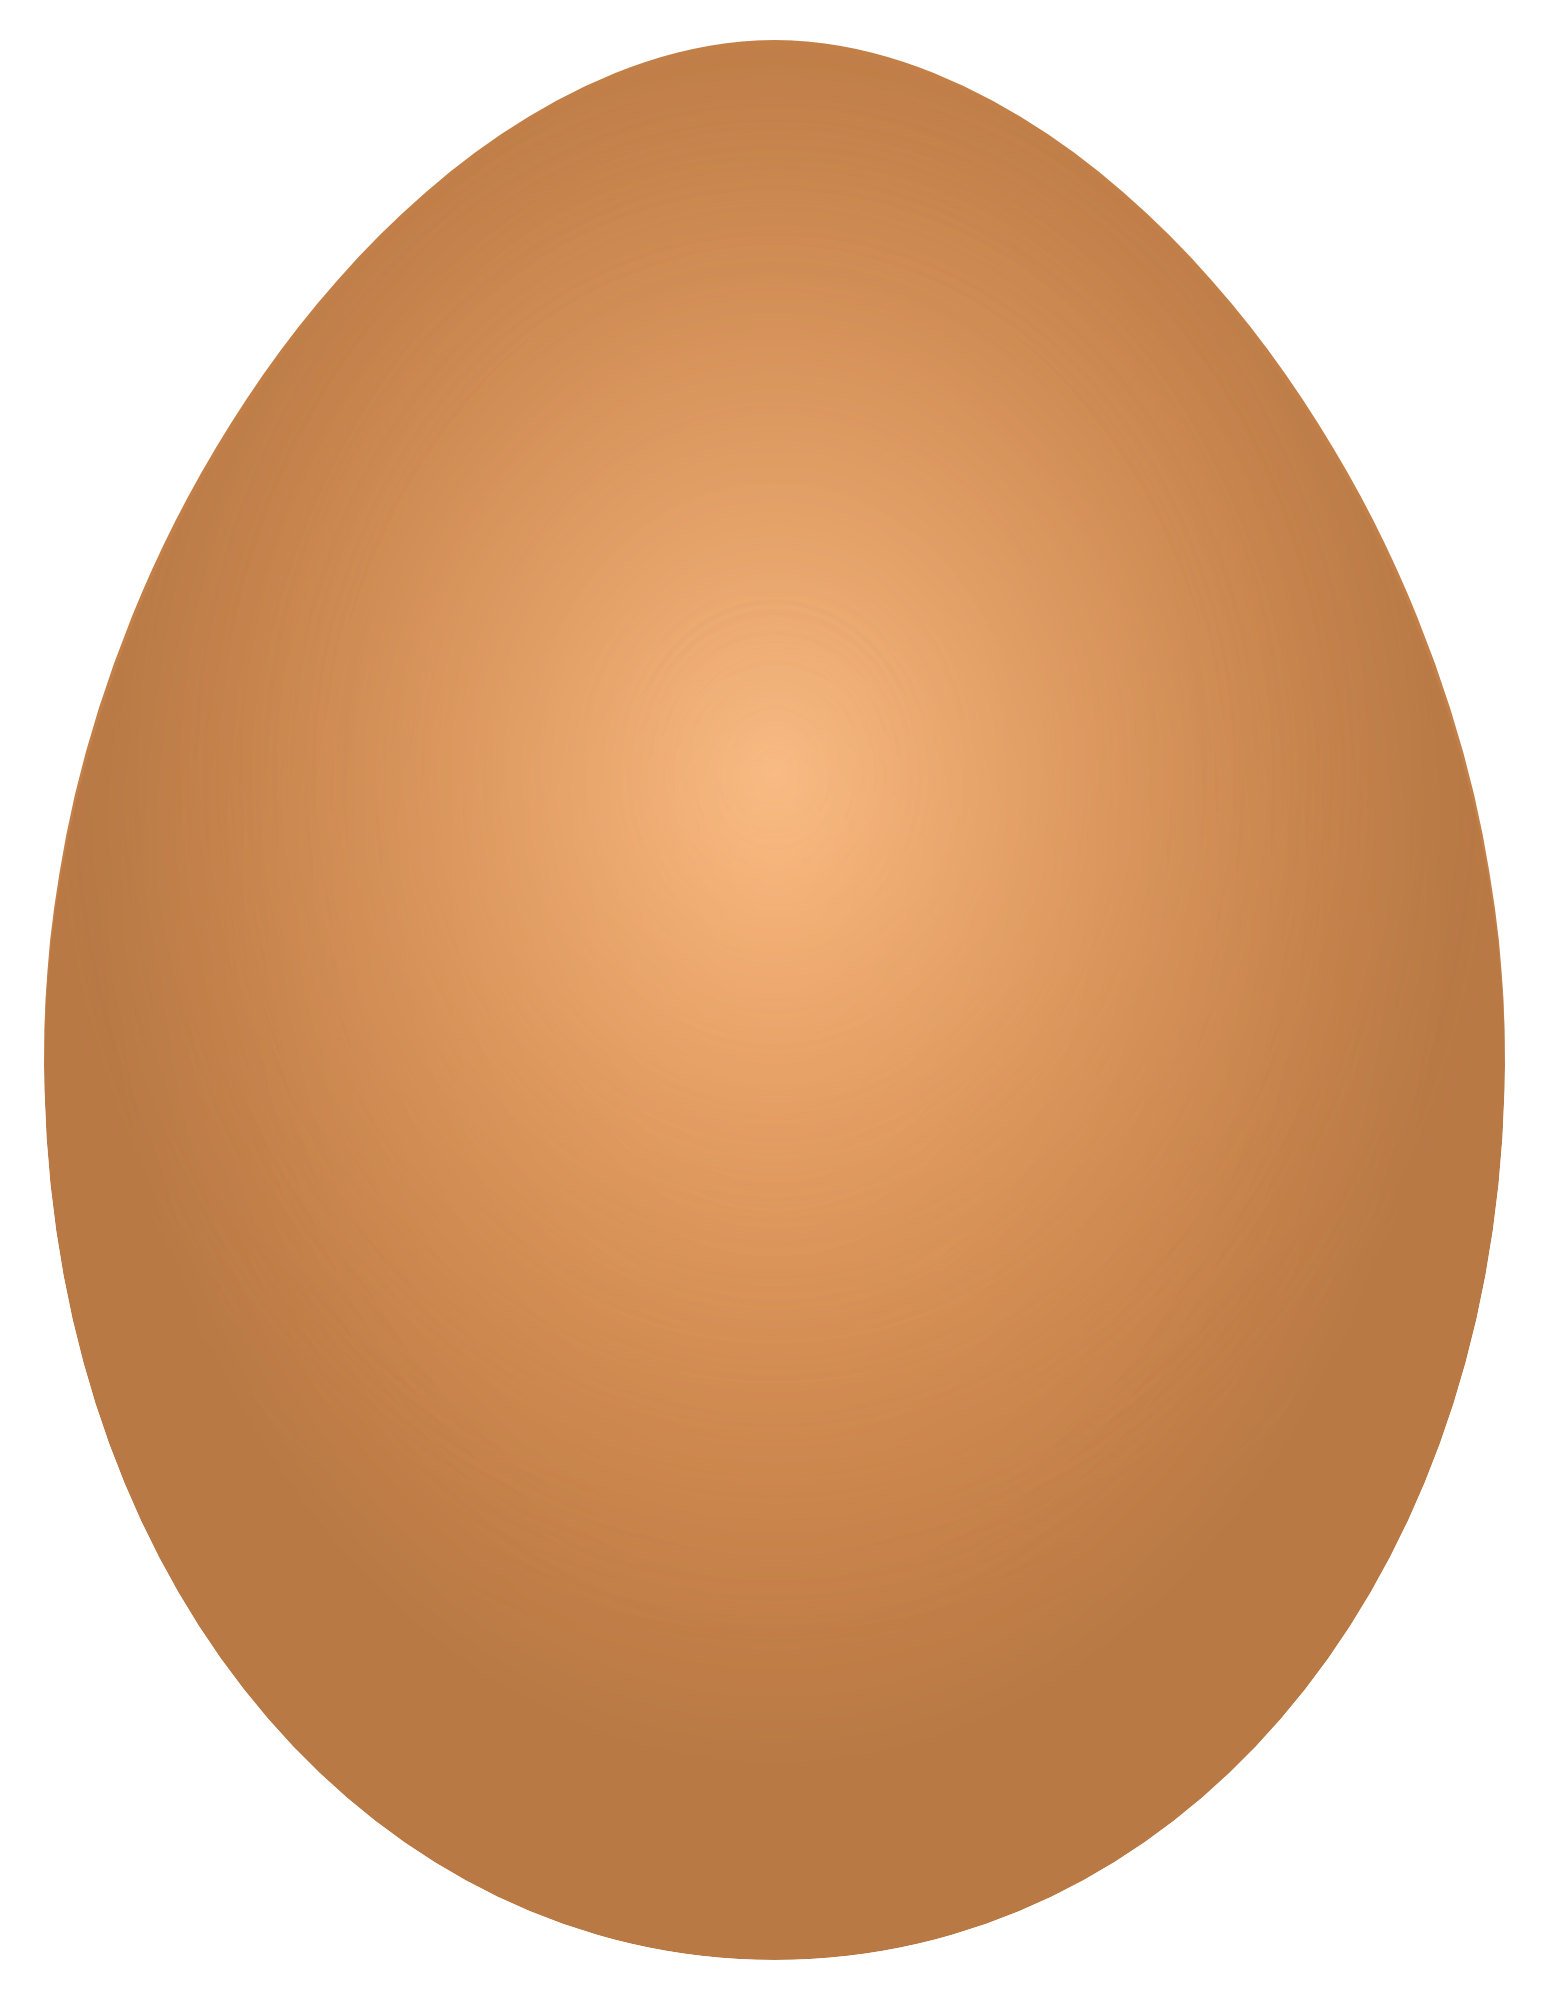 Brown Eggs PNG Pic